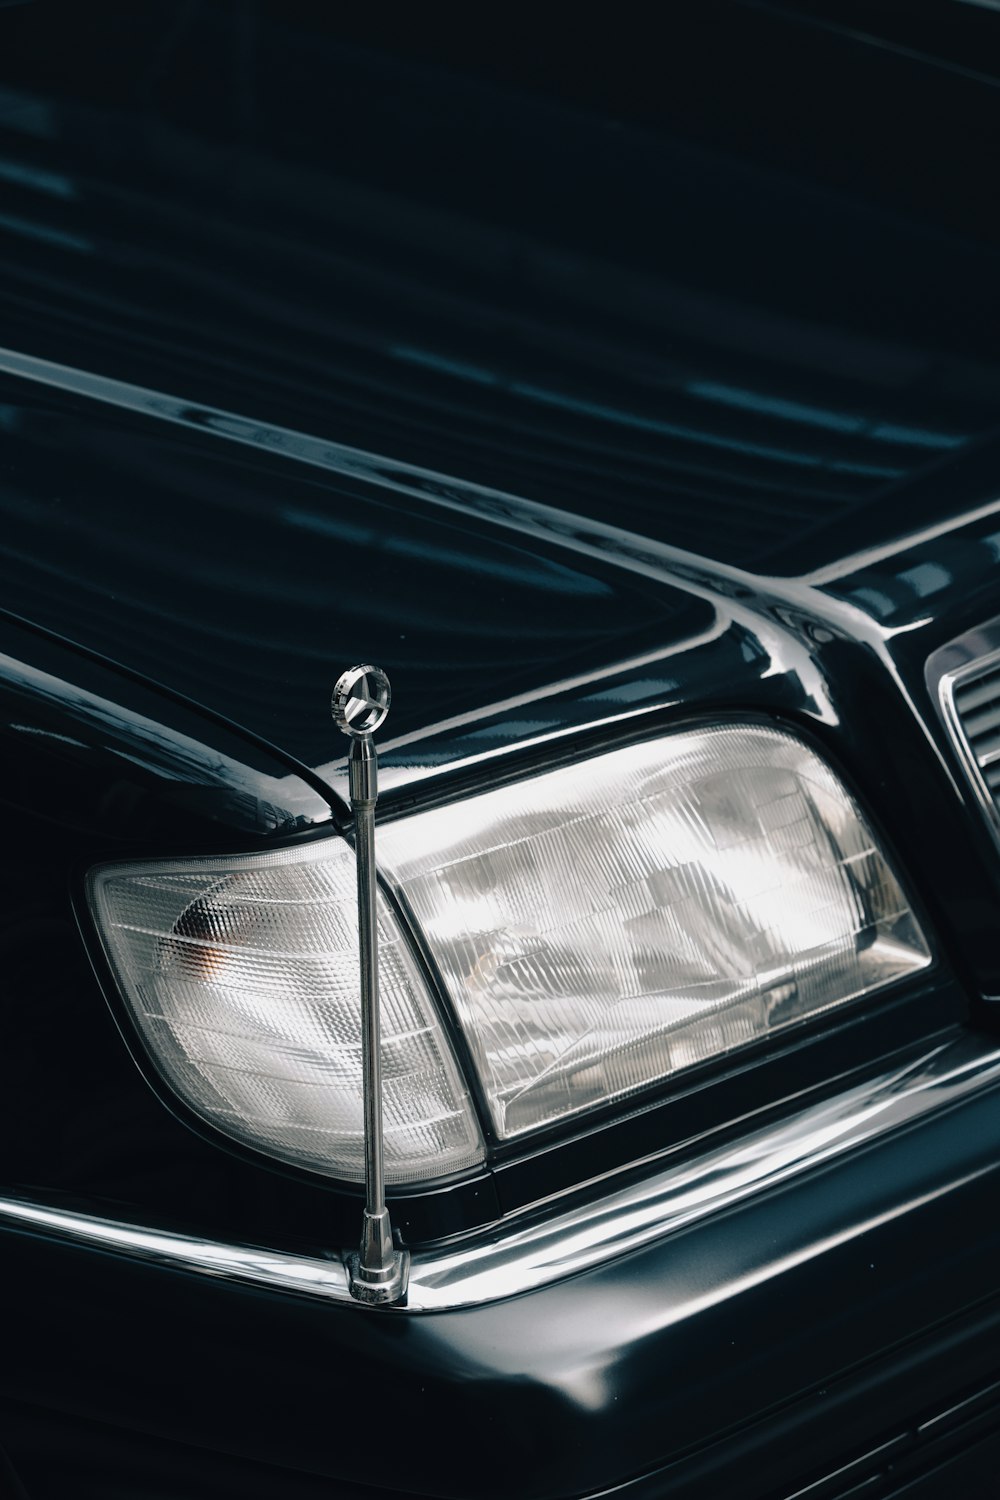 a close up of a car headlight on a black car